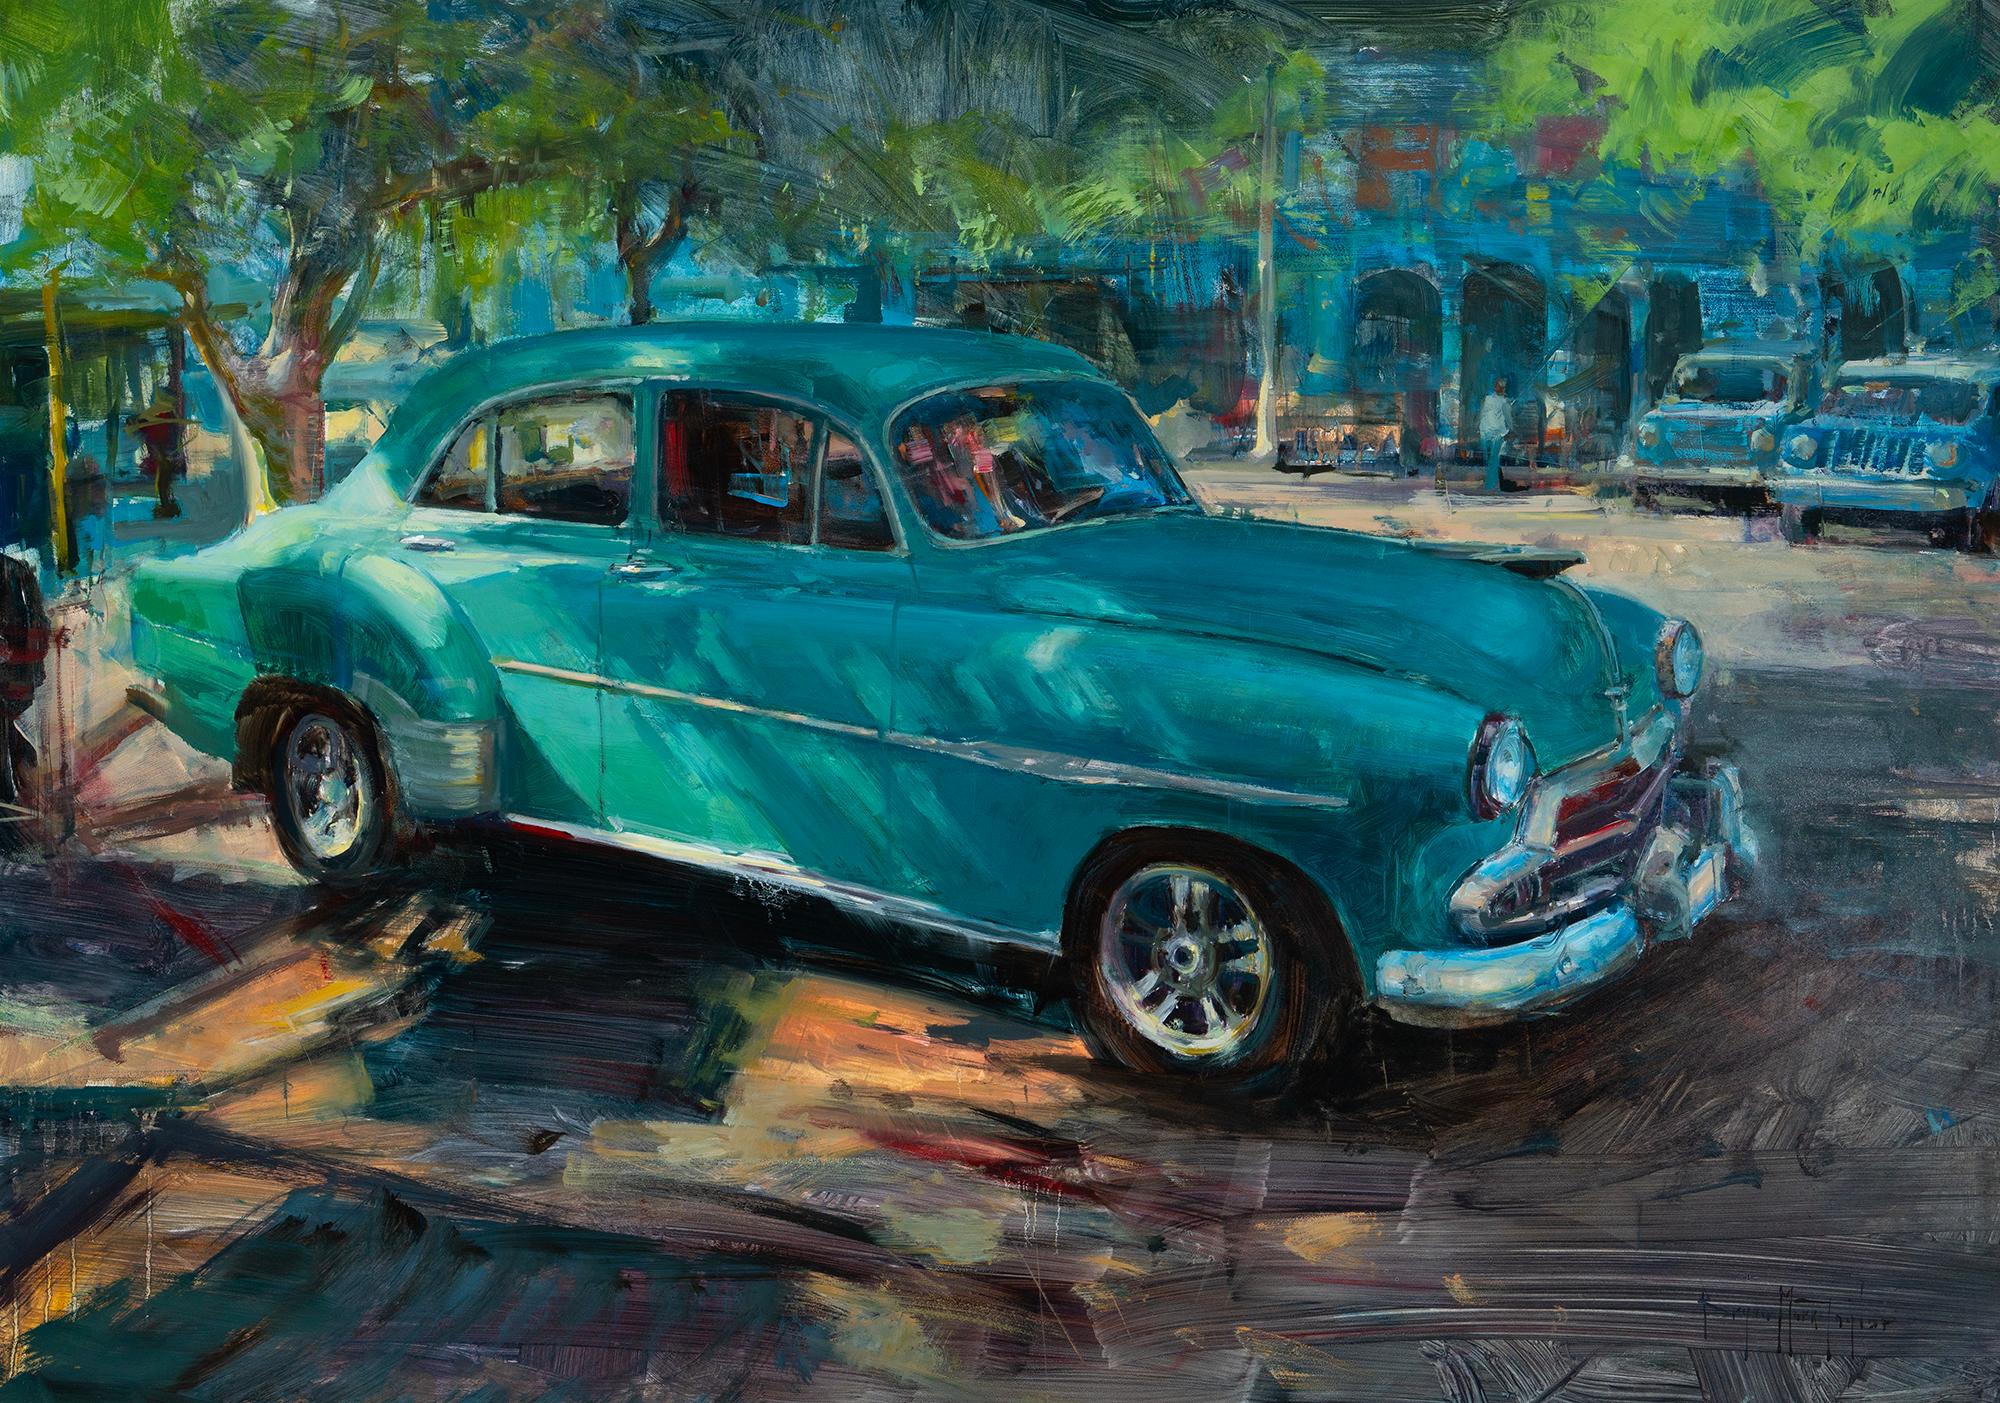 Bryan Mark Taylor Landscape Painting - Modern Impressionist Cityscape "Icon of Havana" Oil 